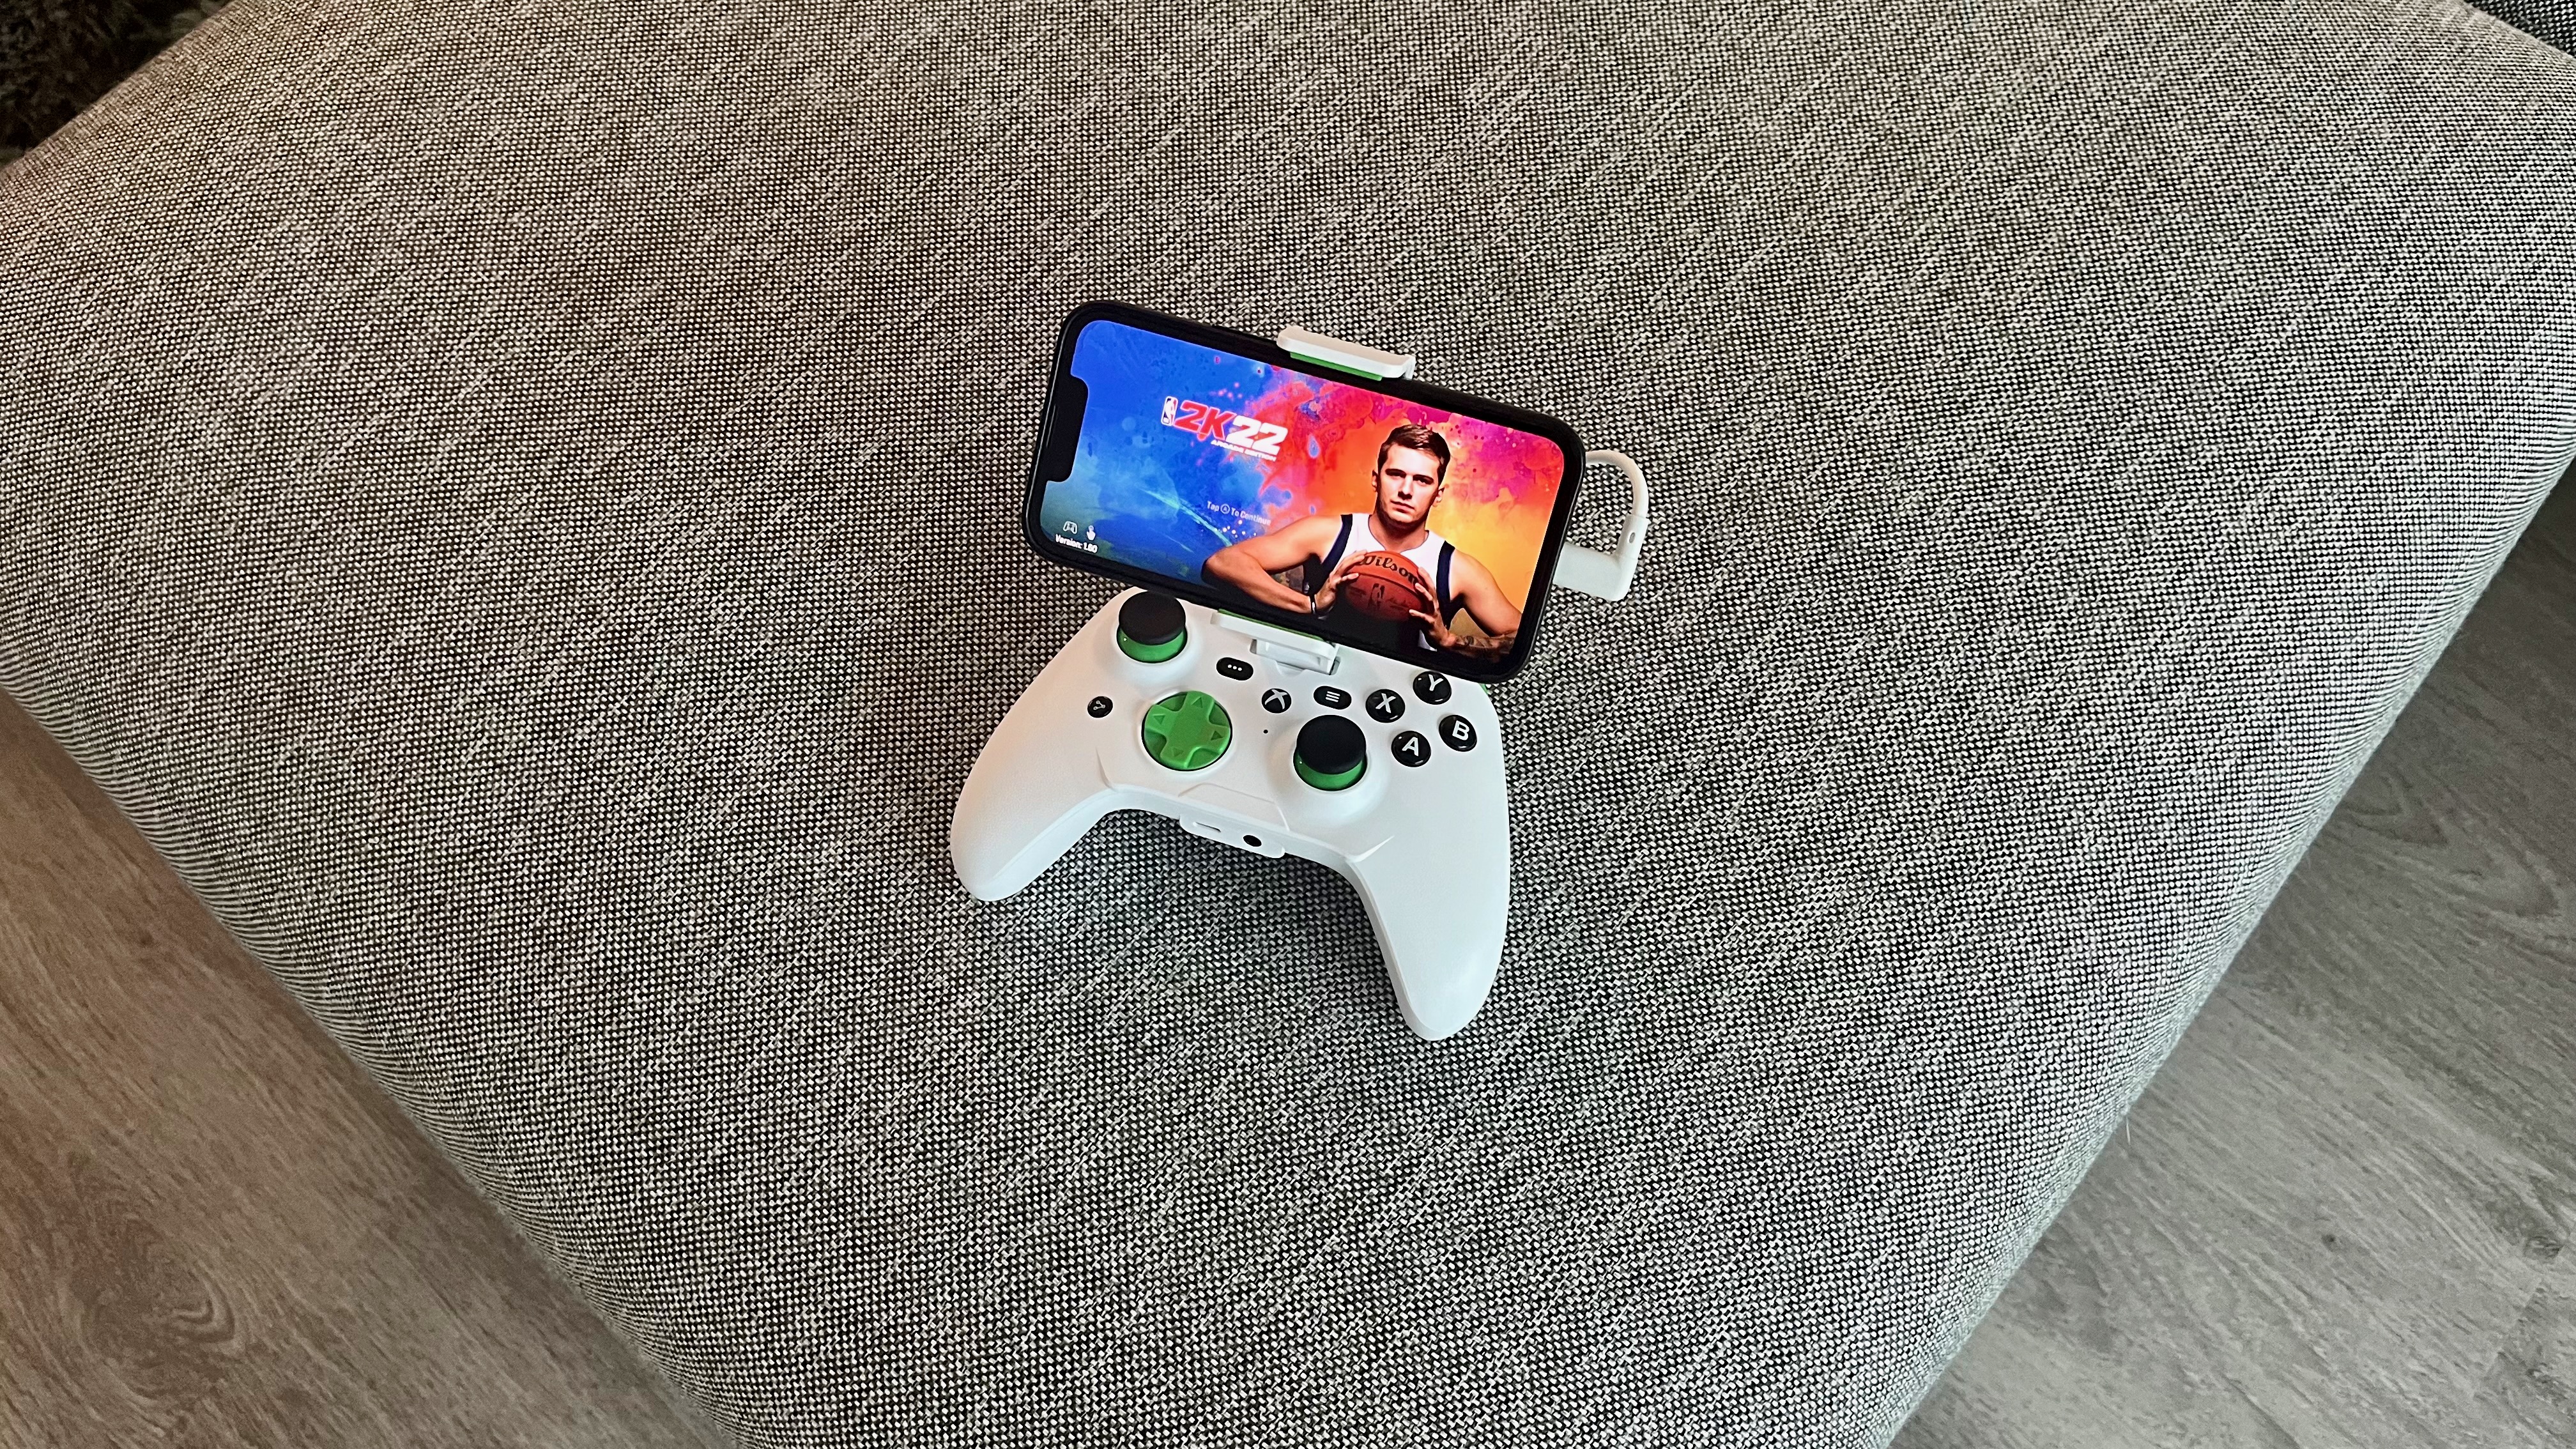 RiotPWR Xbox Cloud Gaming Controller untuk iOS di sofa